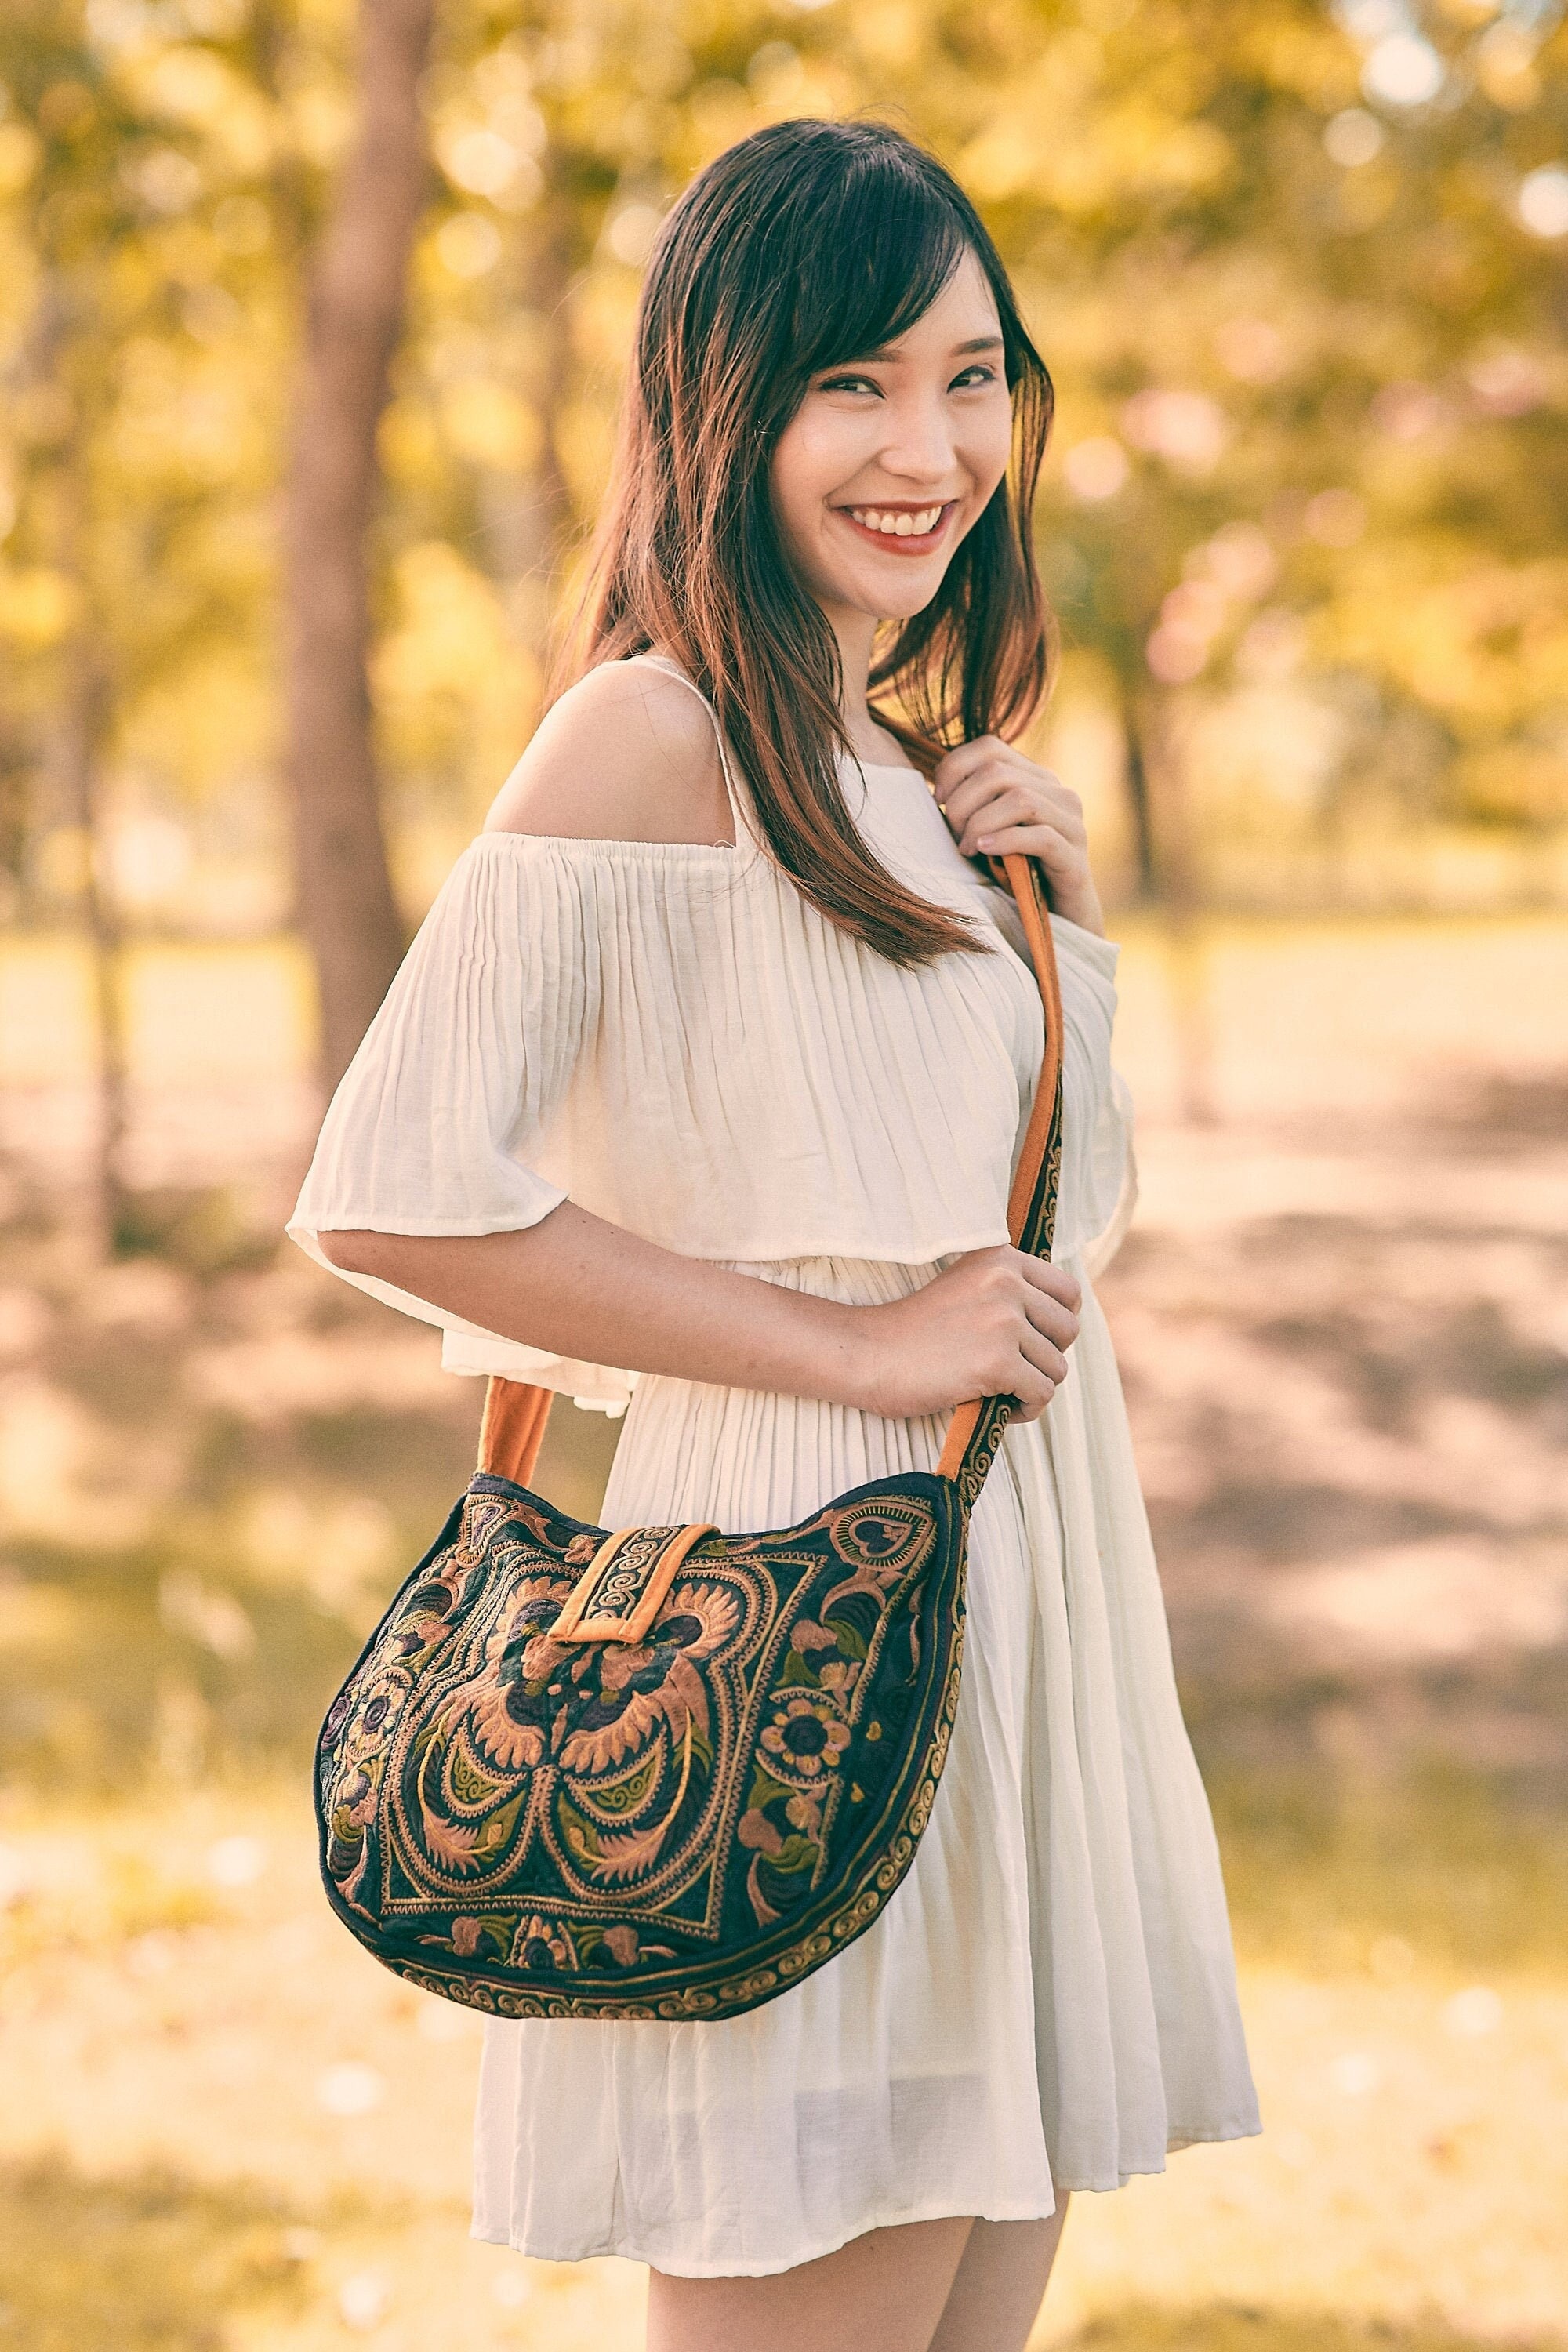 Hynbase Women Fashion Korean Canvas Cross Shoulder Tote Handbag Purse